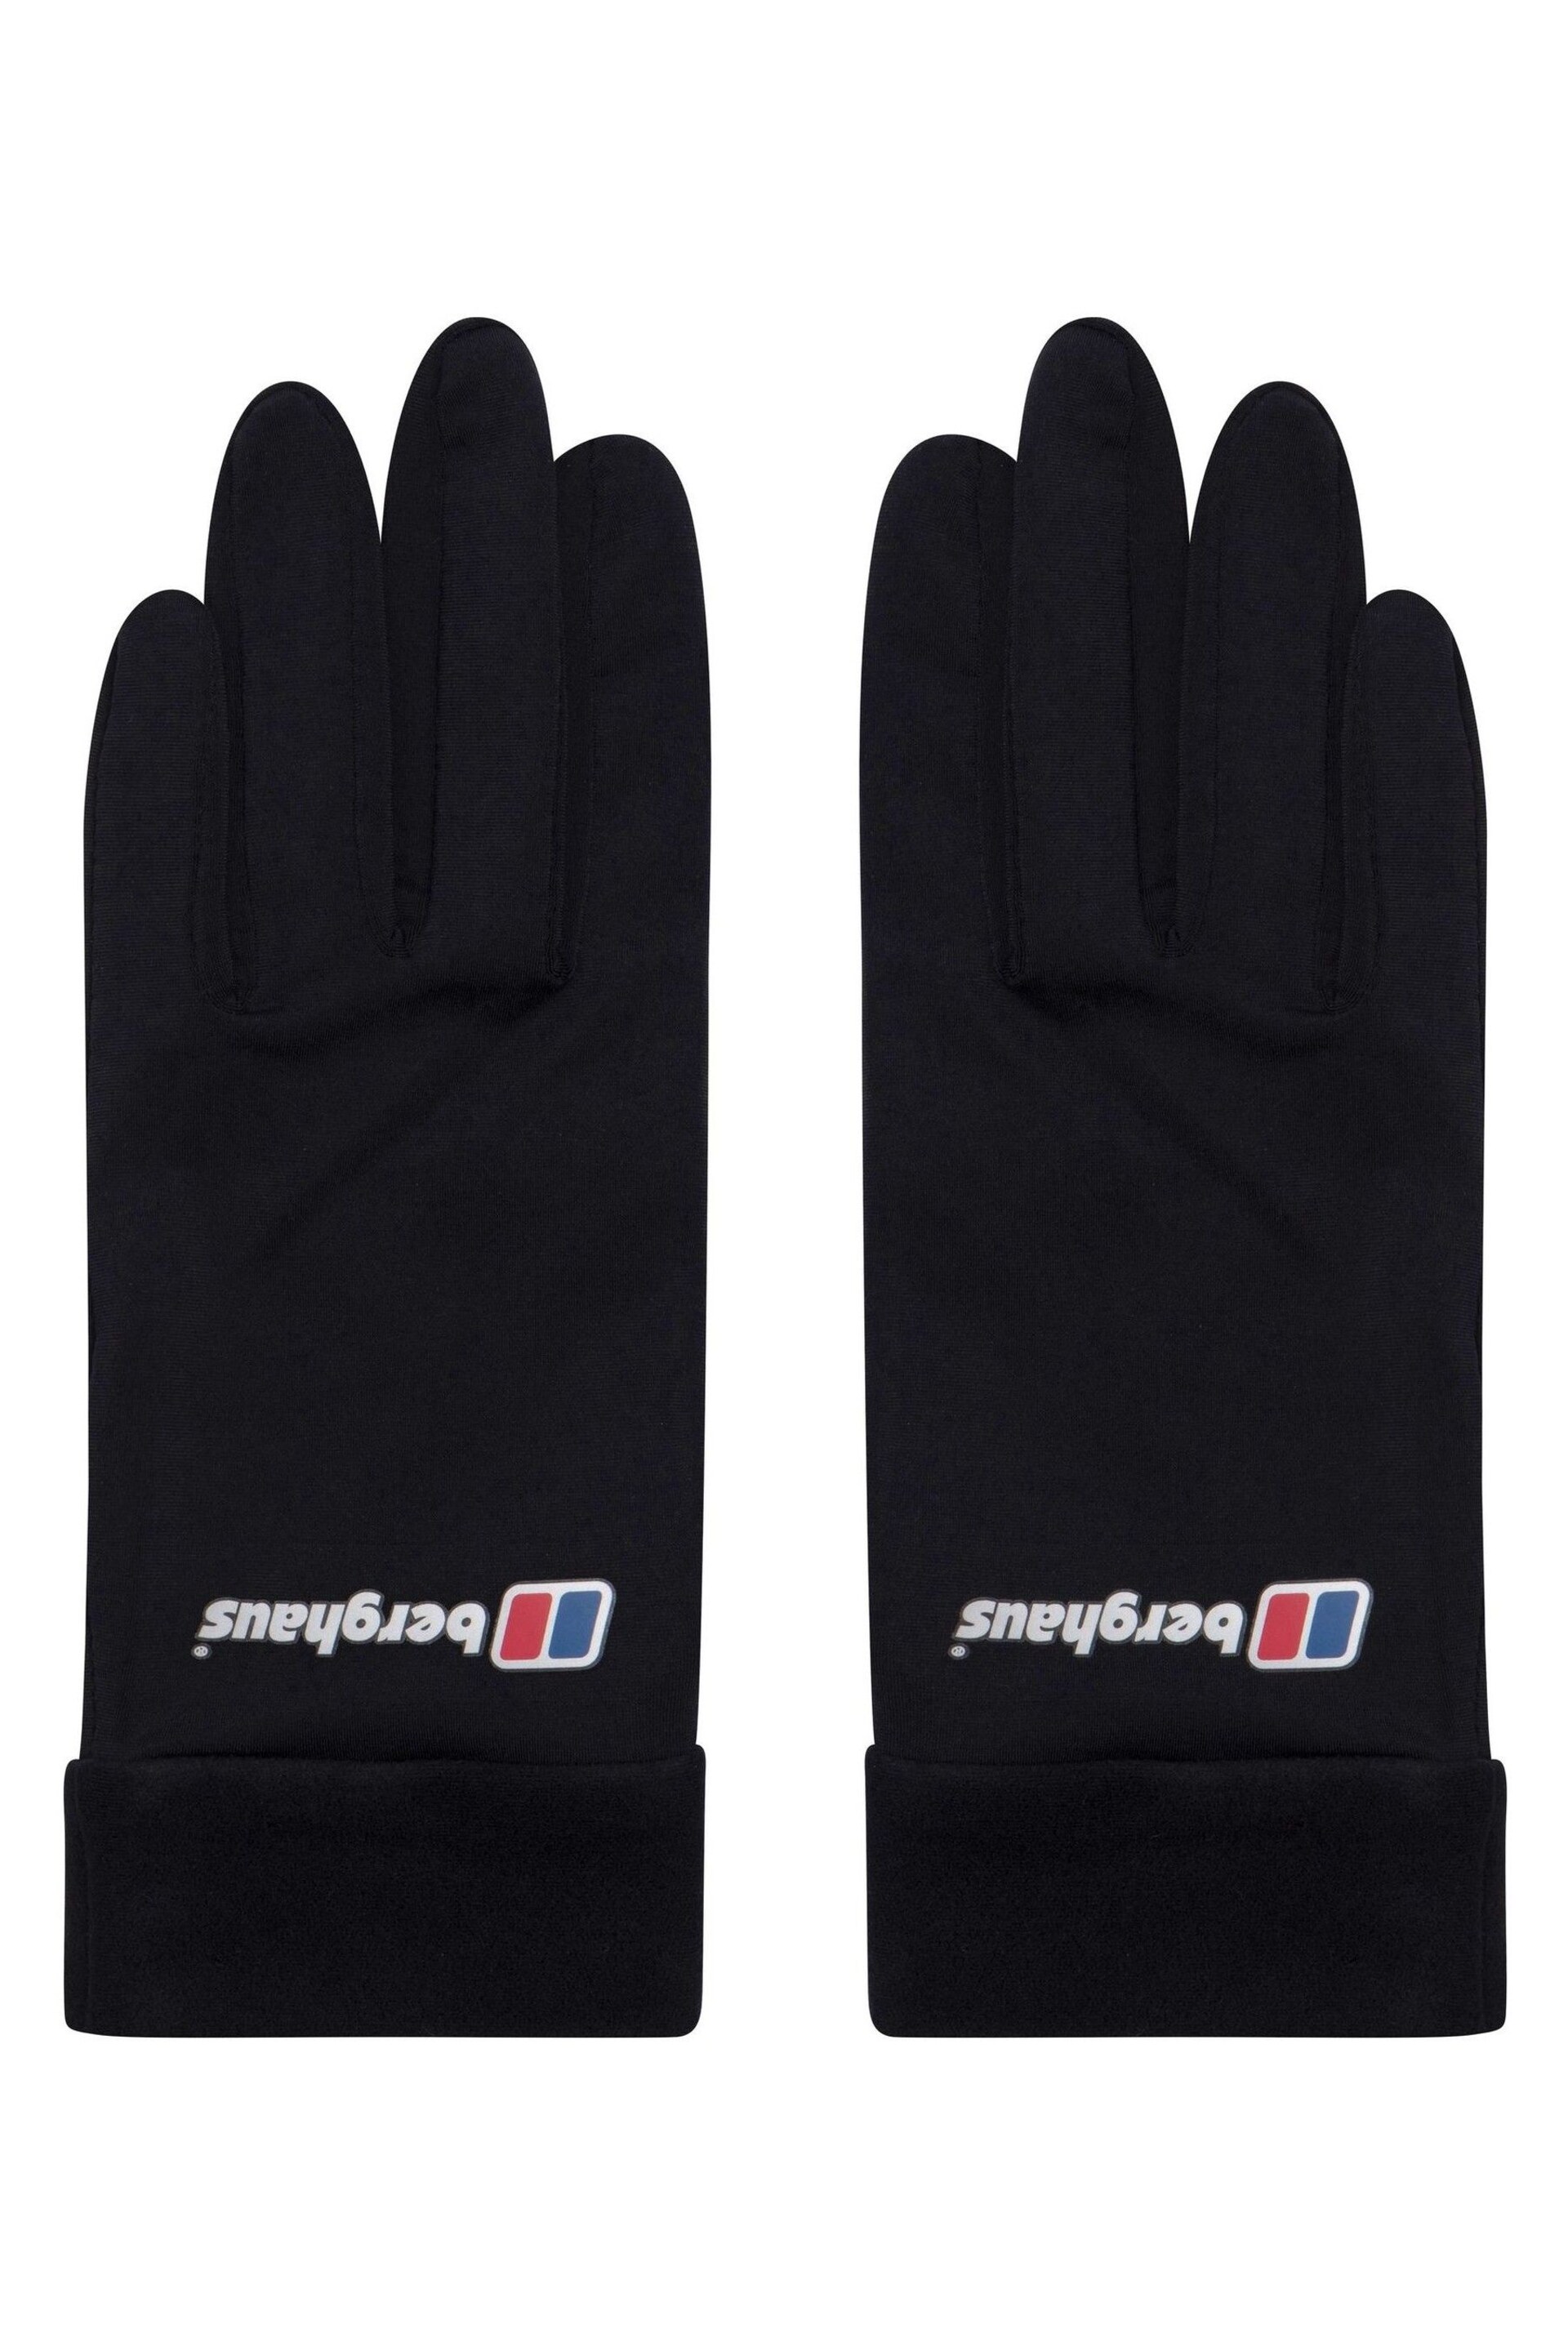 Berghaus Black Gloves - Image 1 of 4